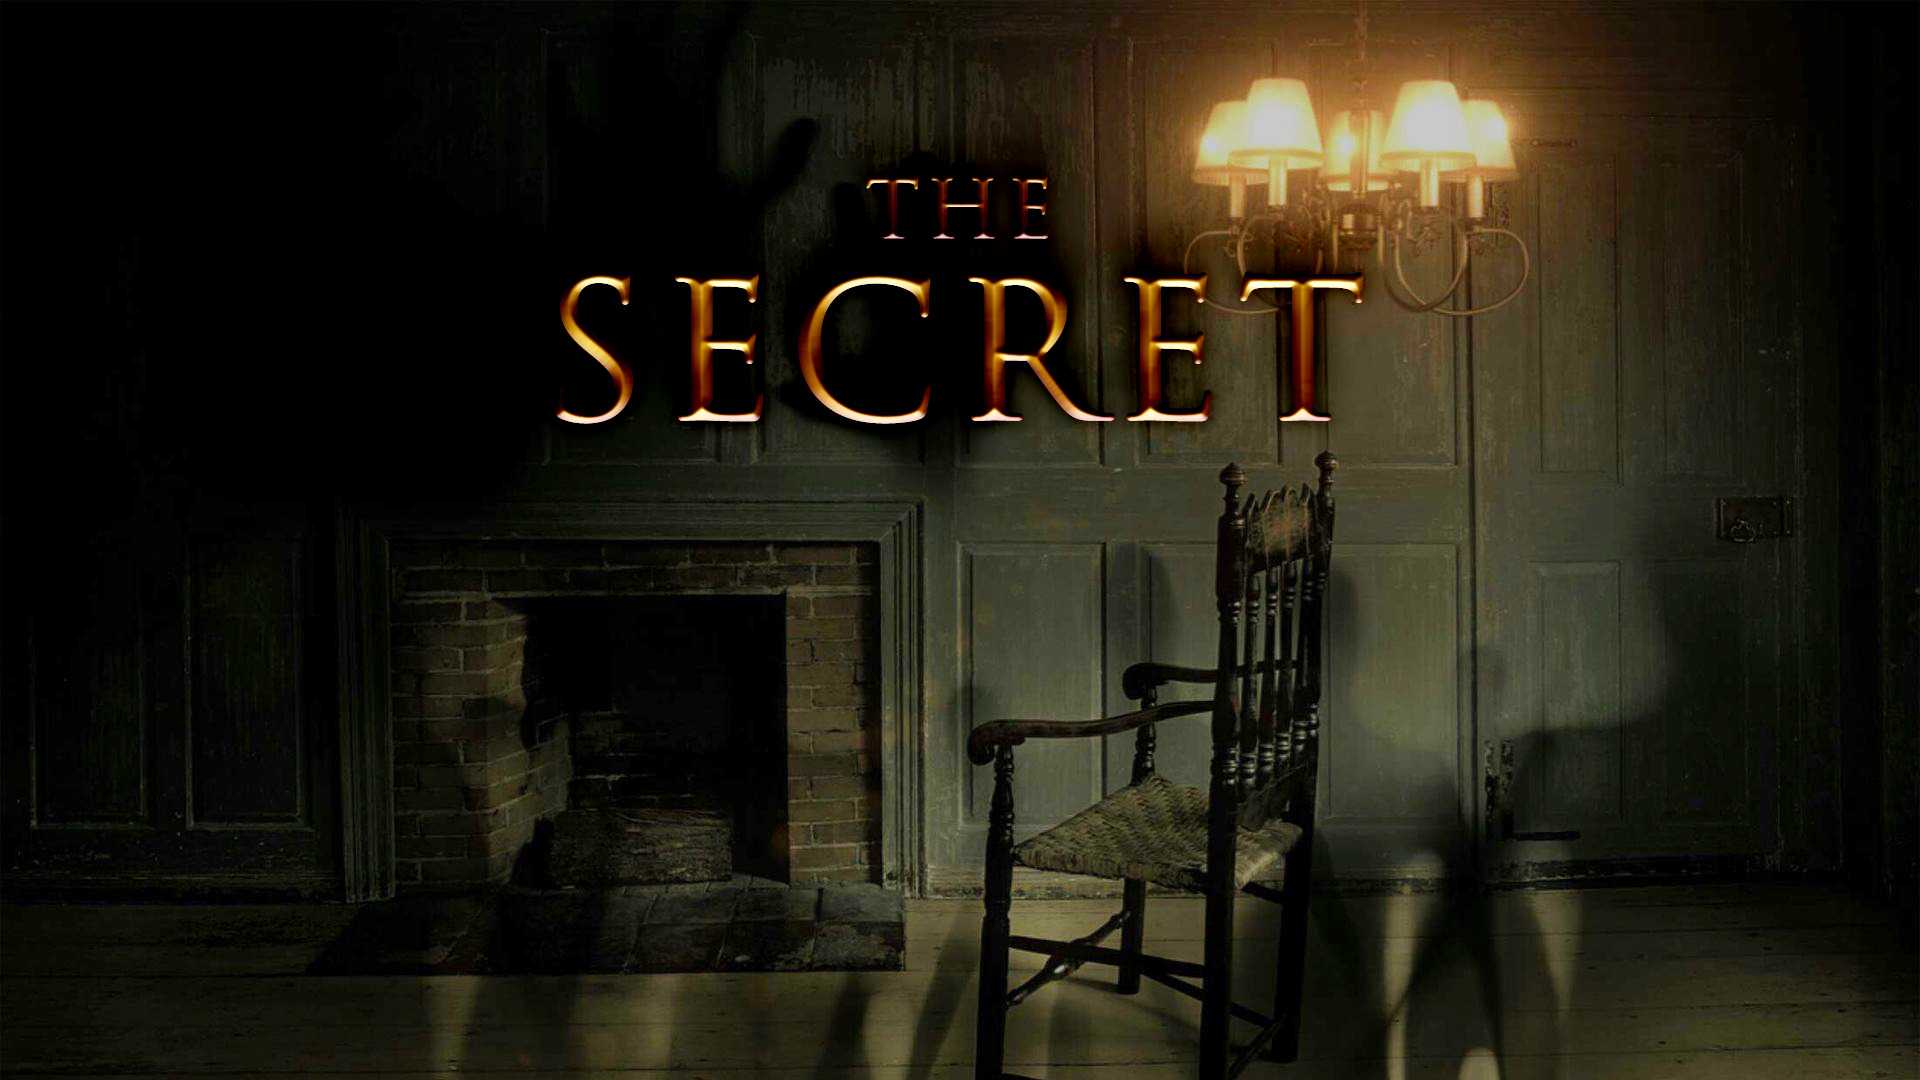 The Secret - Image 109